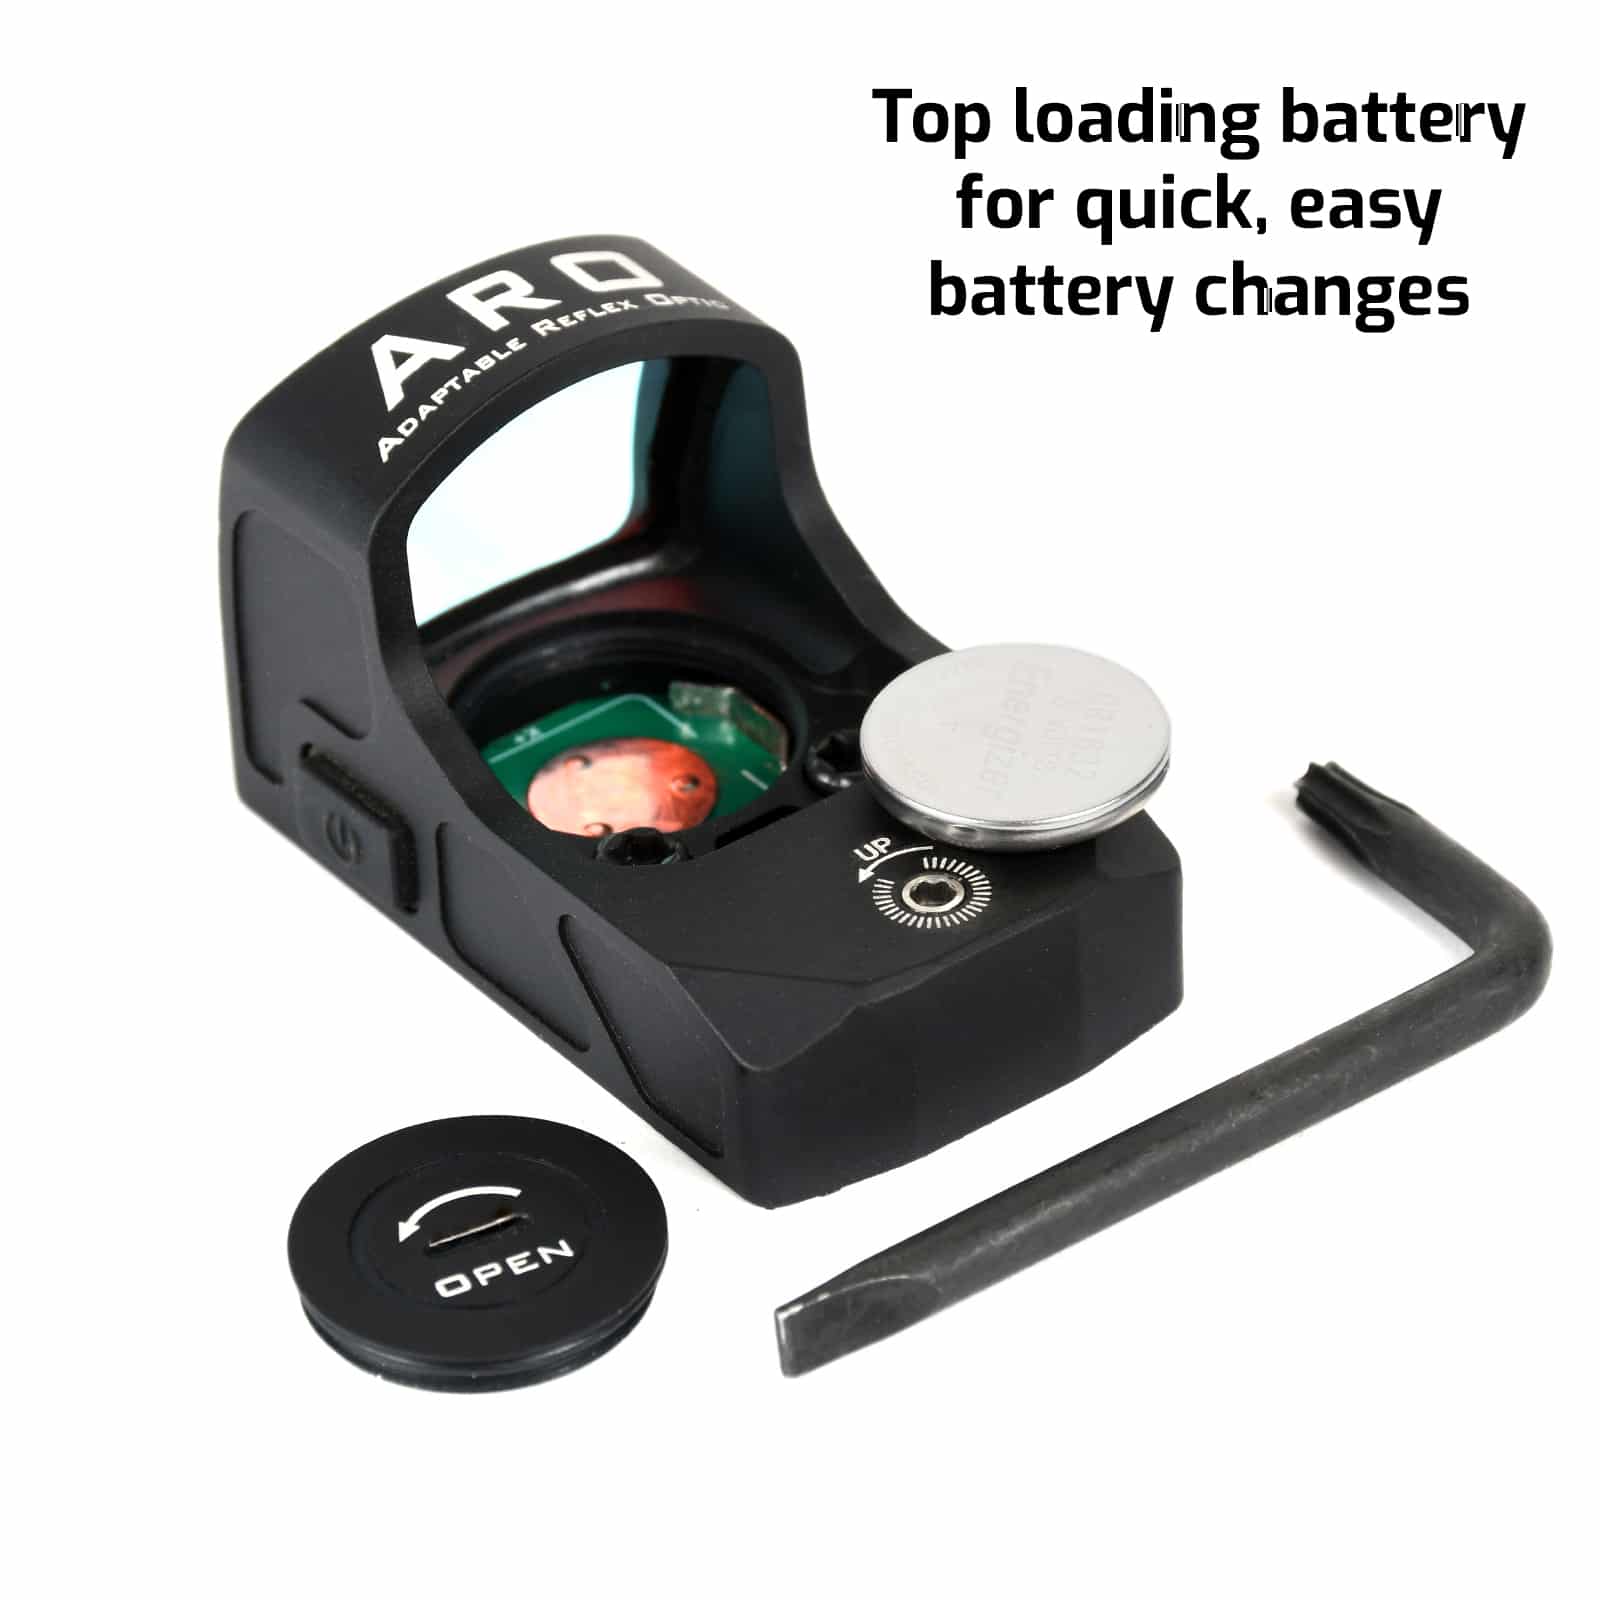 Shopping Automobilbatterie -frostschutzmittel -refraktometer ATC -kühlmittel  -tester Für Batterie -säure -ethylen -propylenglykol in China